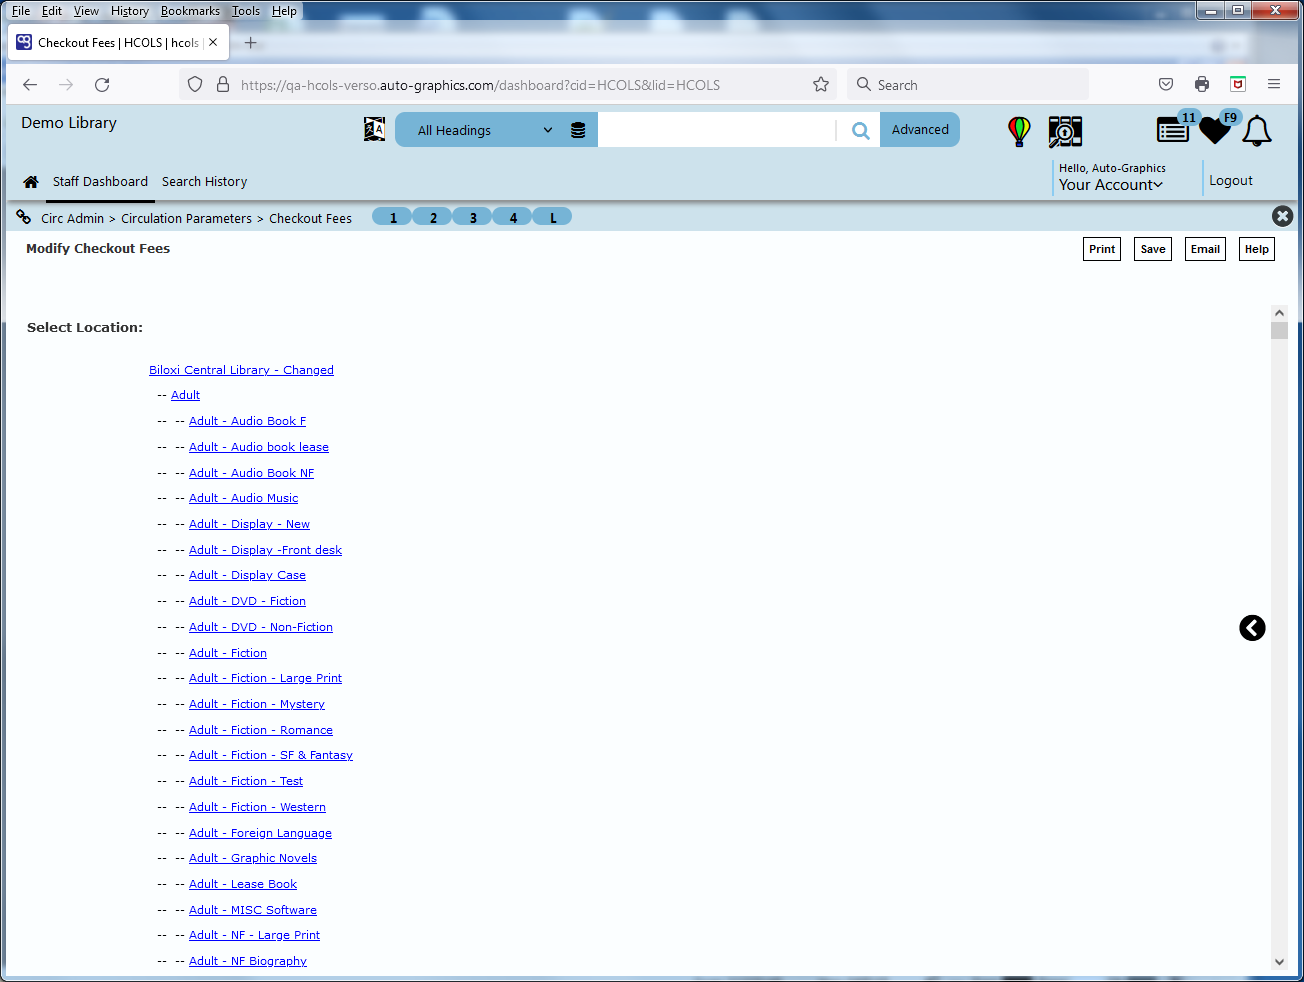 image of Modify Checkout Fees - Select Location Screen